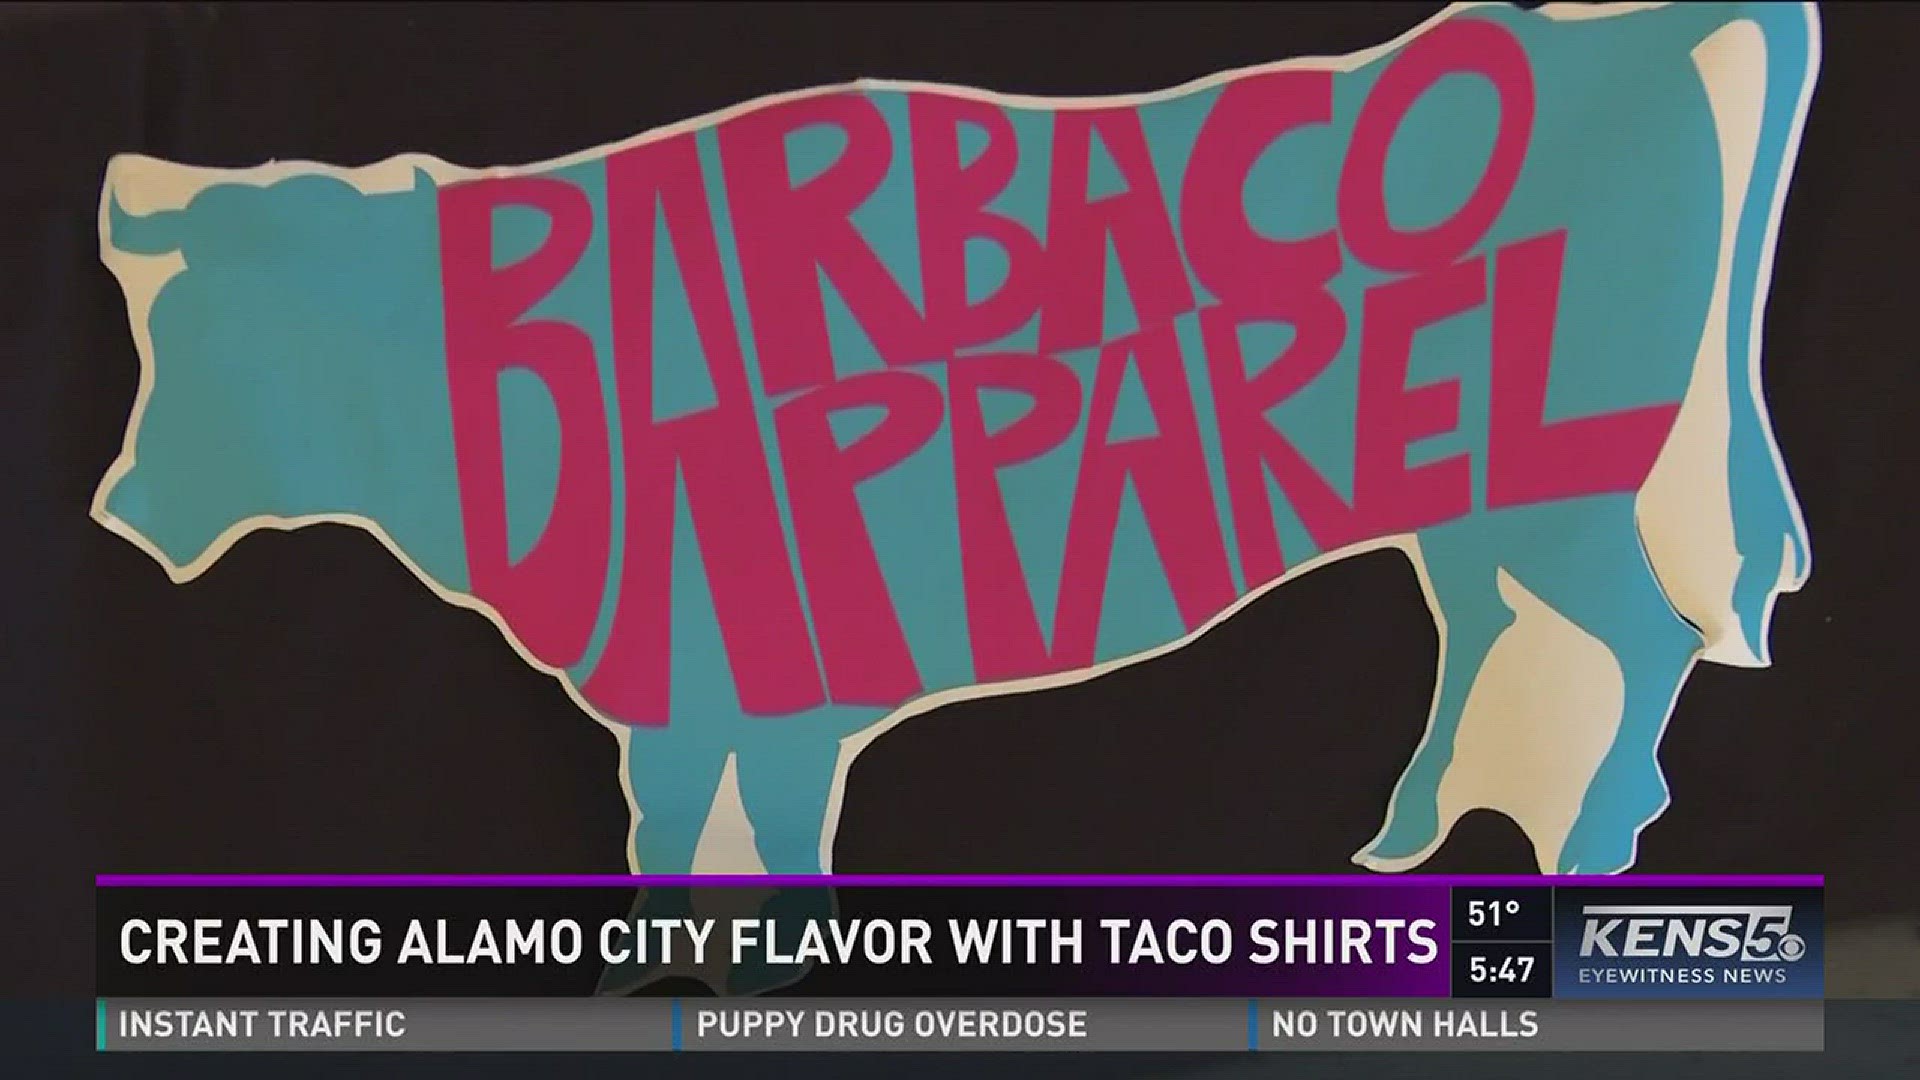 Creating Alamo City flavor with taco shirts